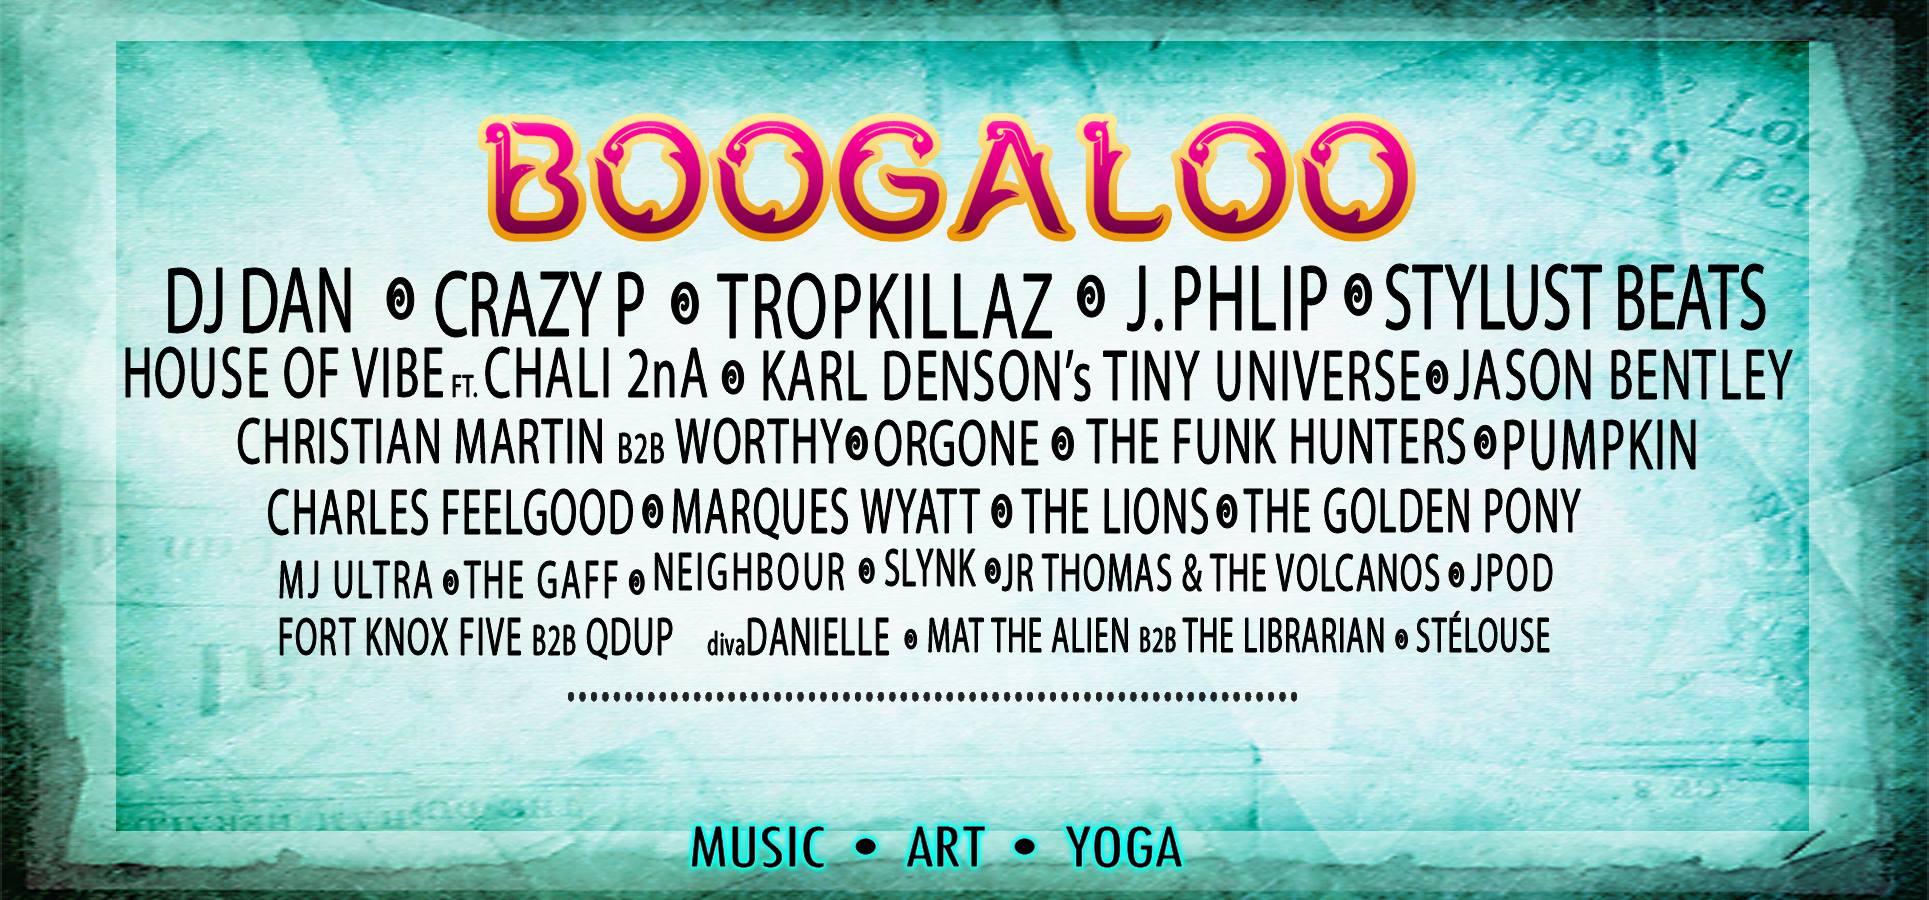 Boogaloo Music and Art Car Festival